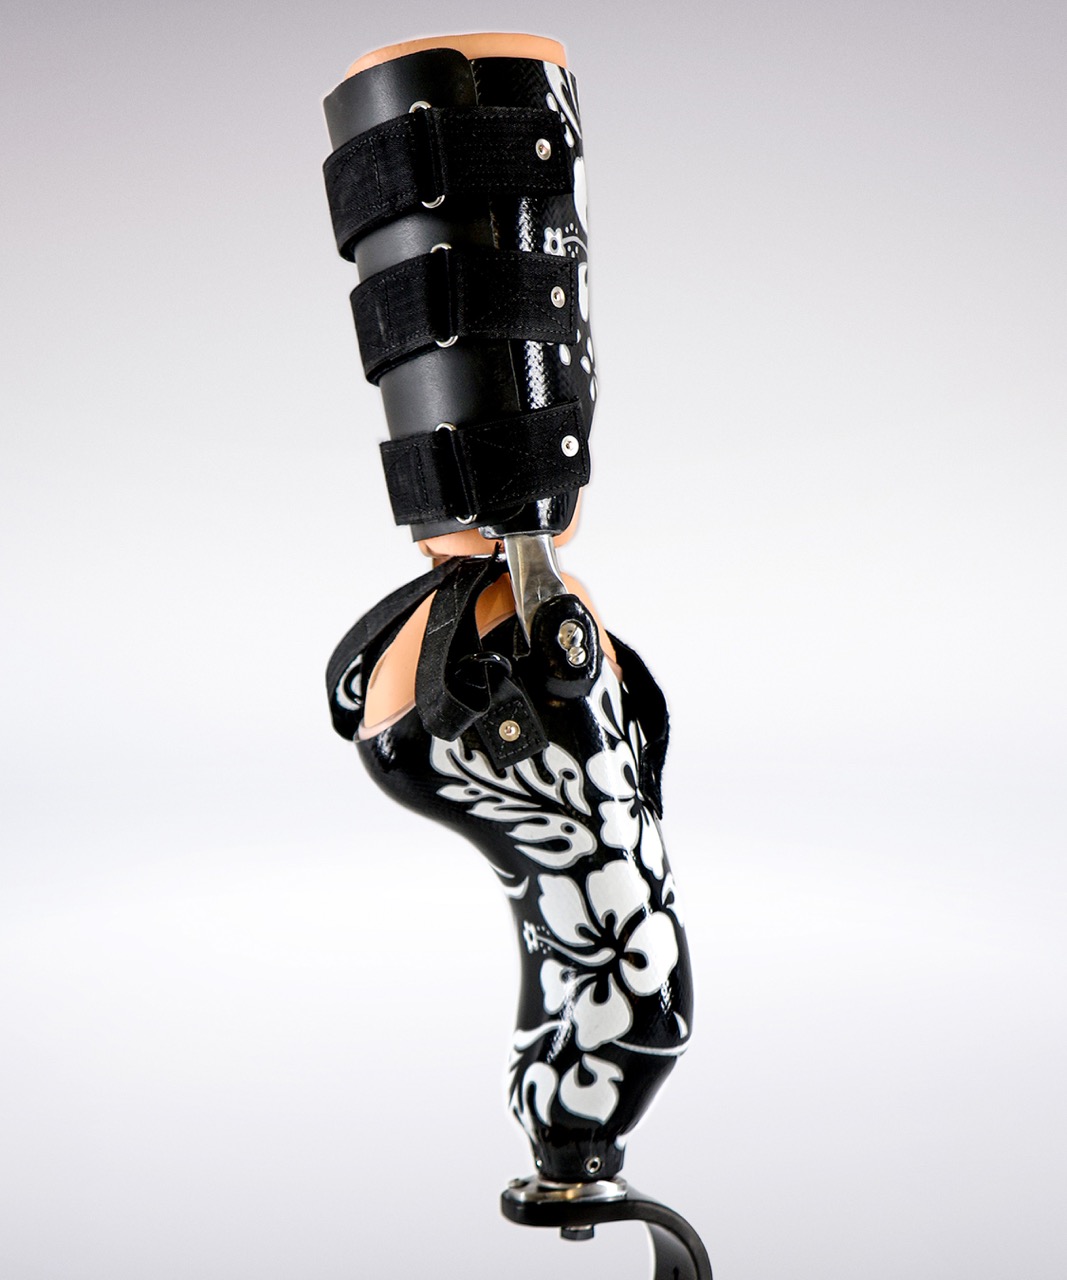 Rotationplasty prosthetic art, with flowers